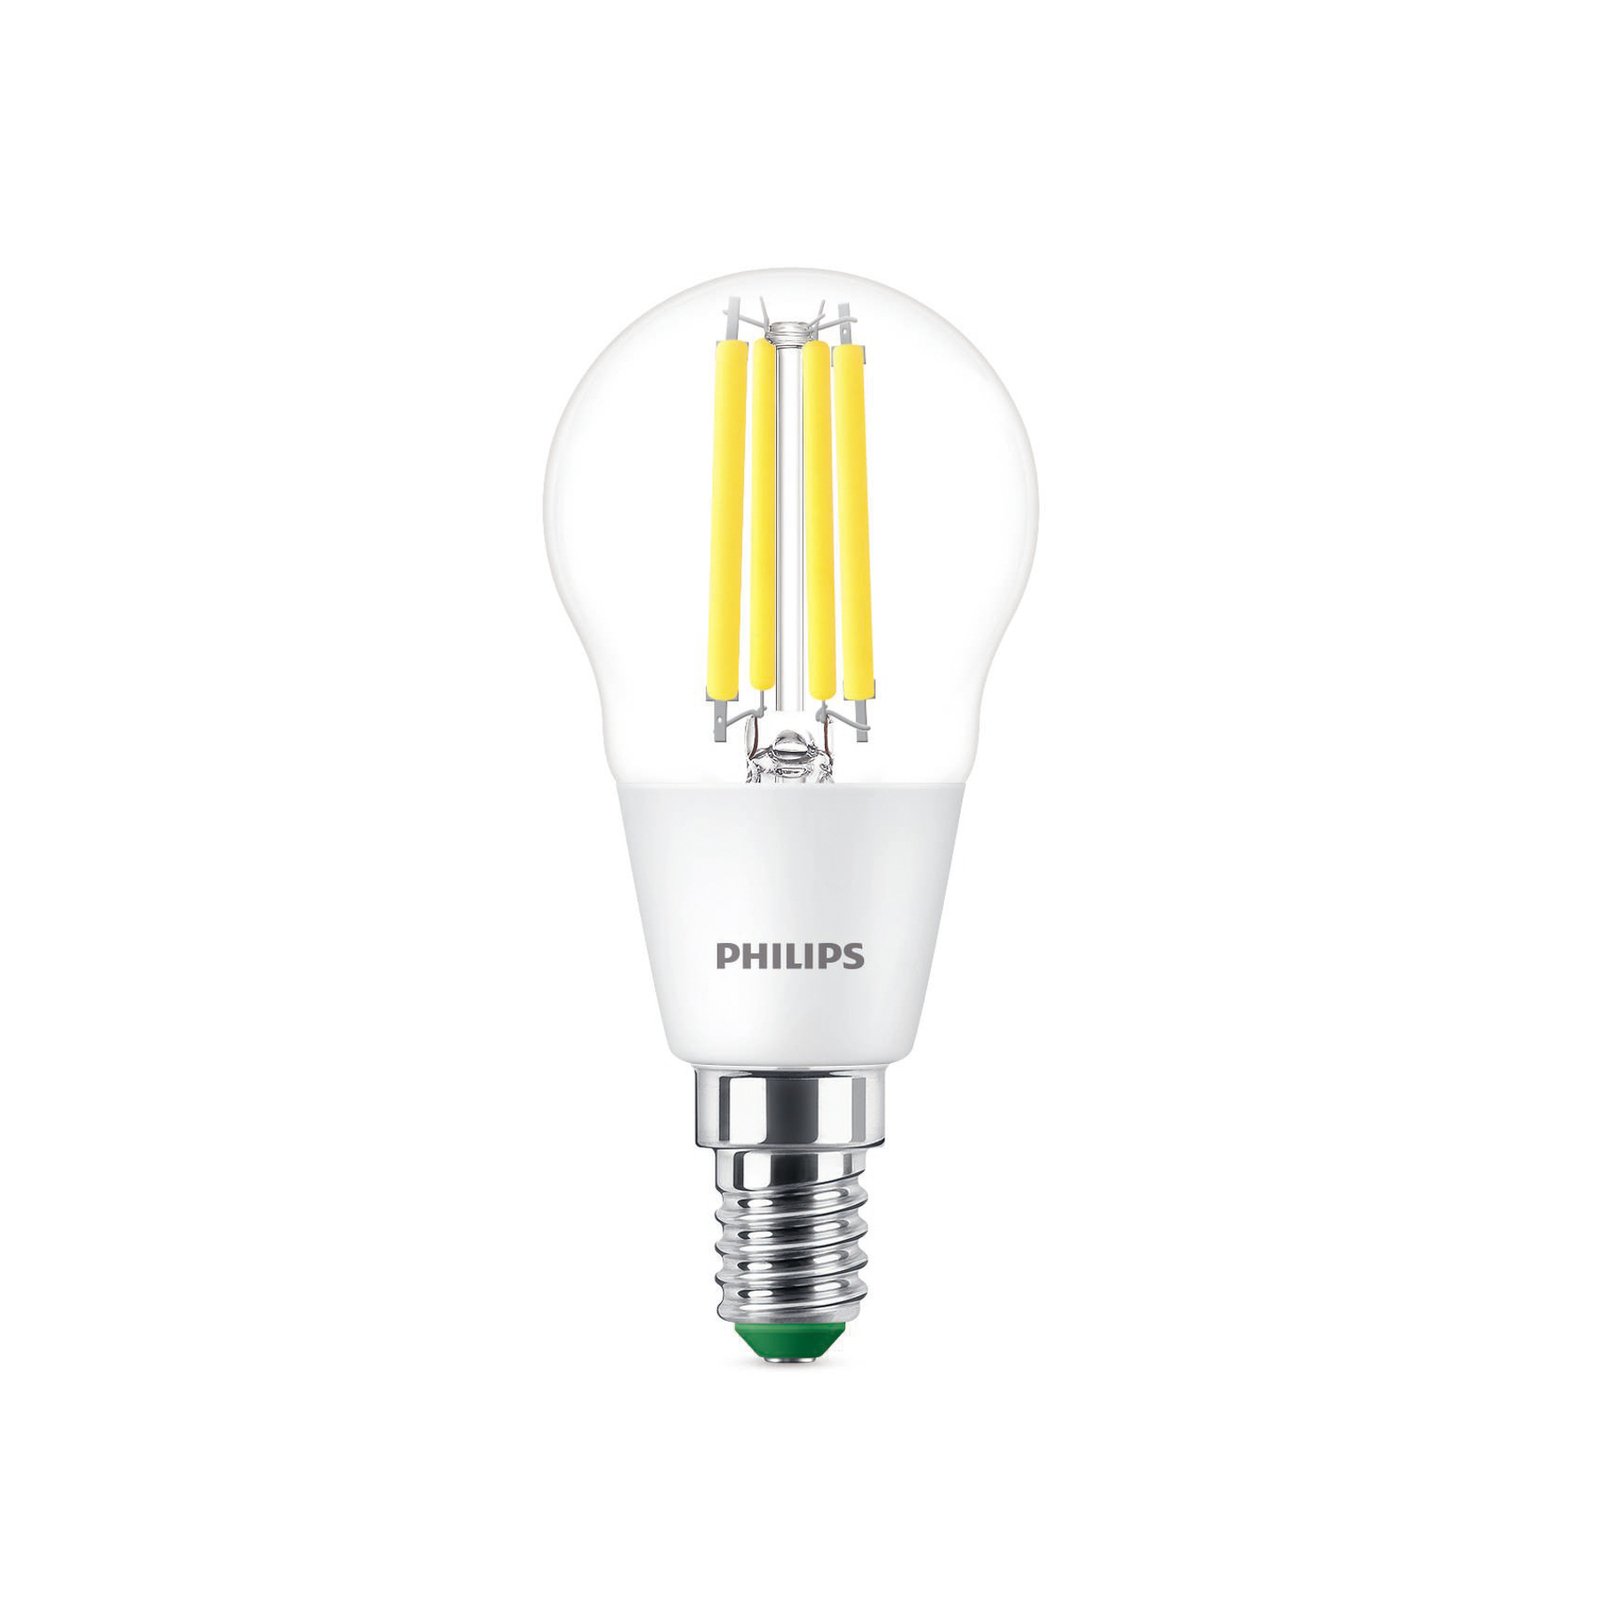 Philips E14 LED bulb G45 2.3W 485lm 4,000K clear